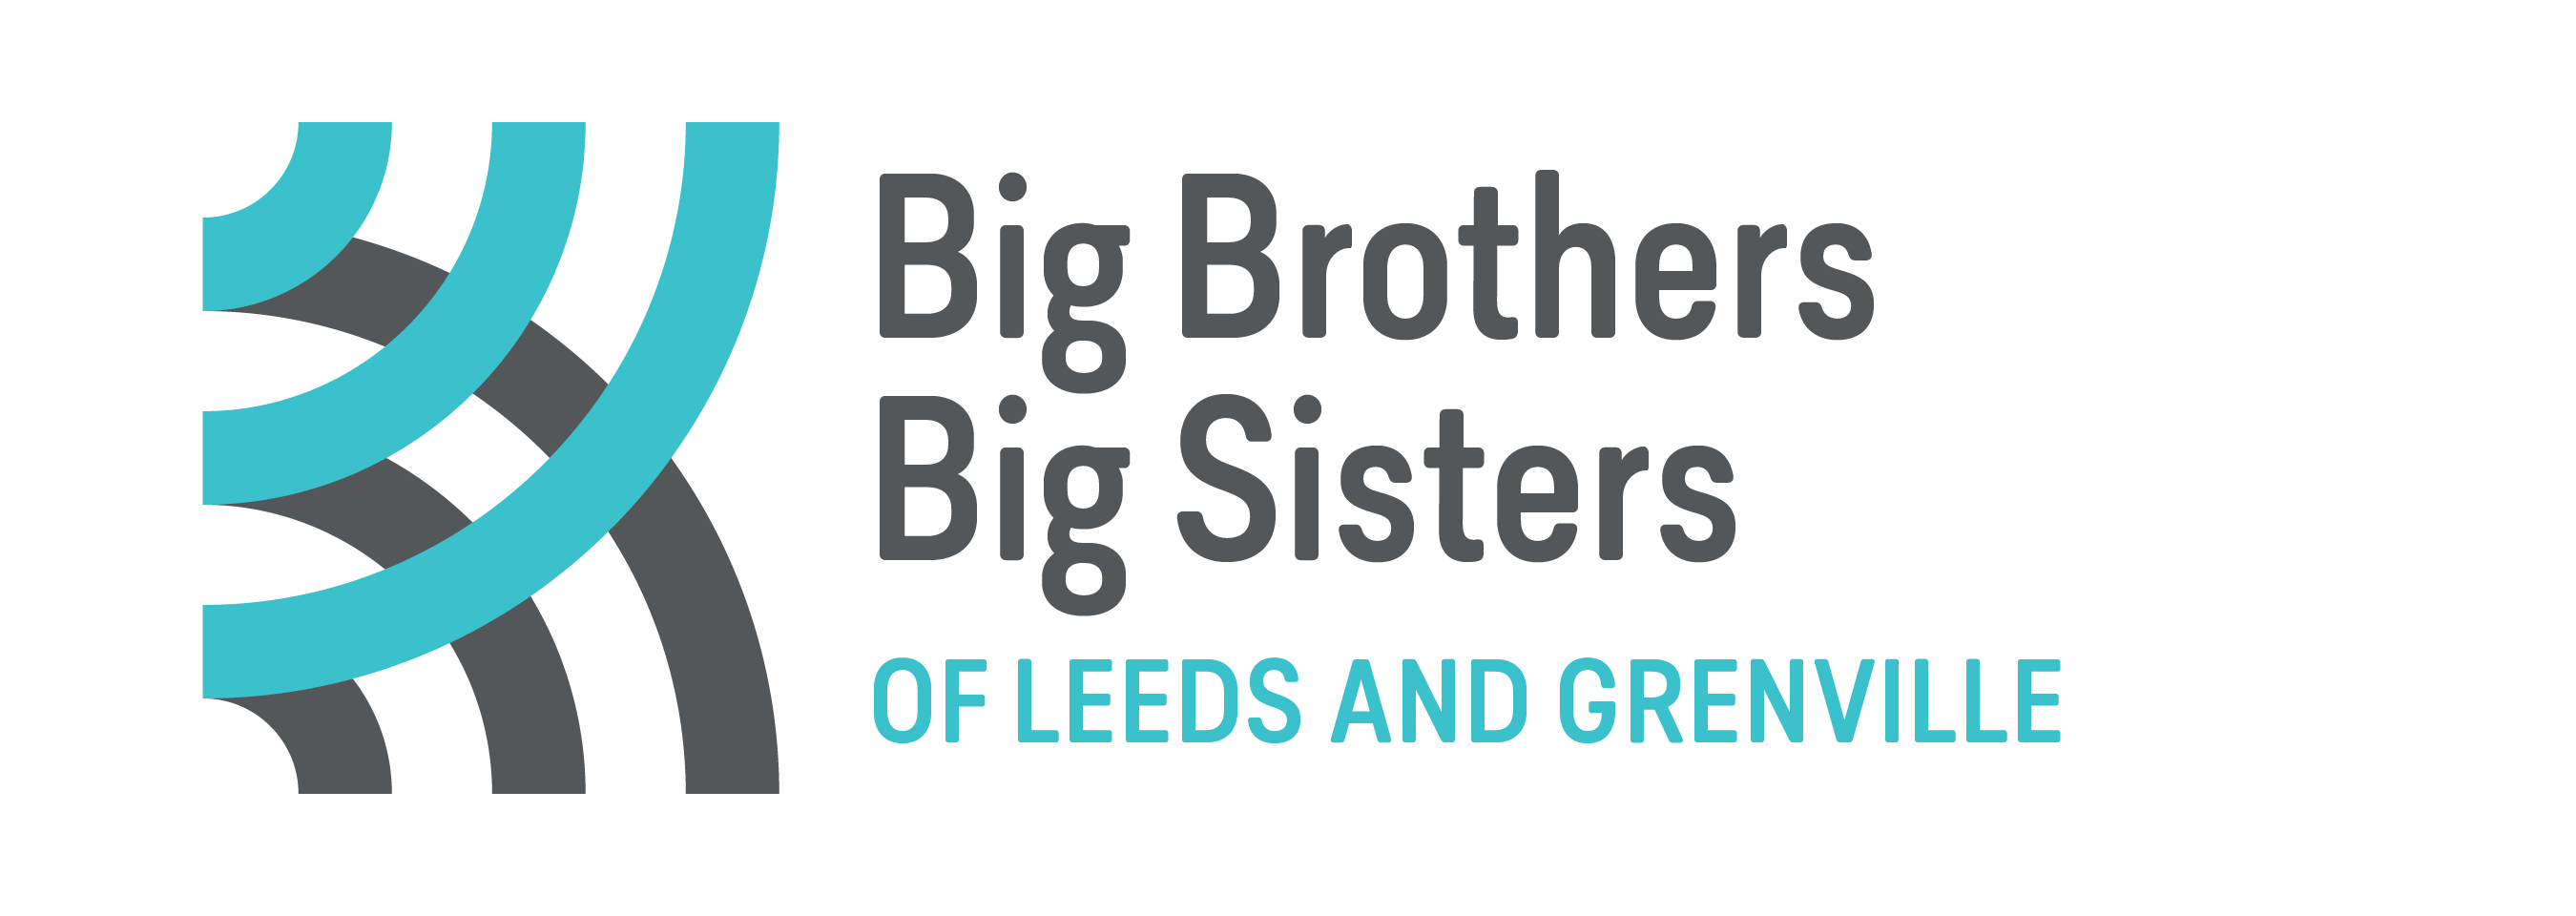 big_brothers_logo